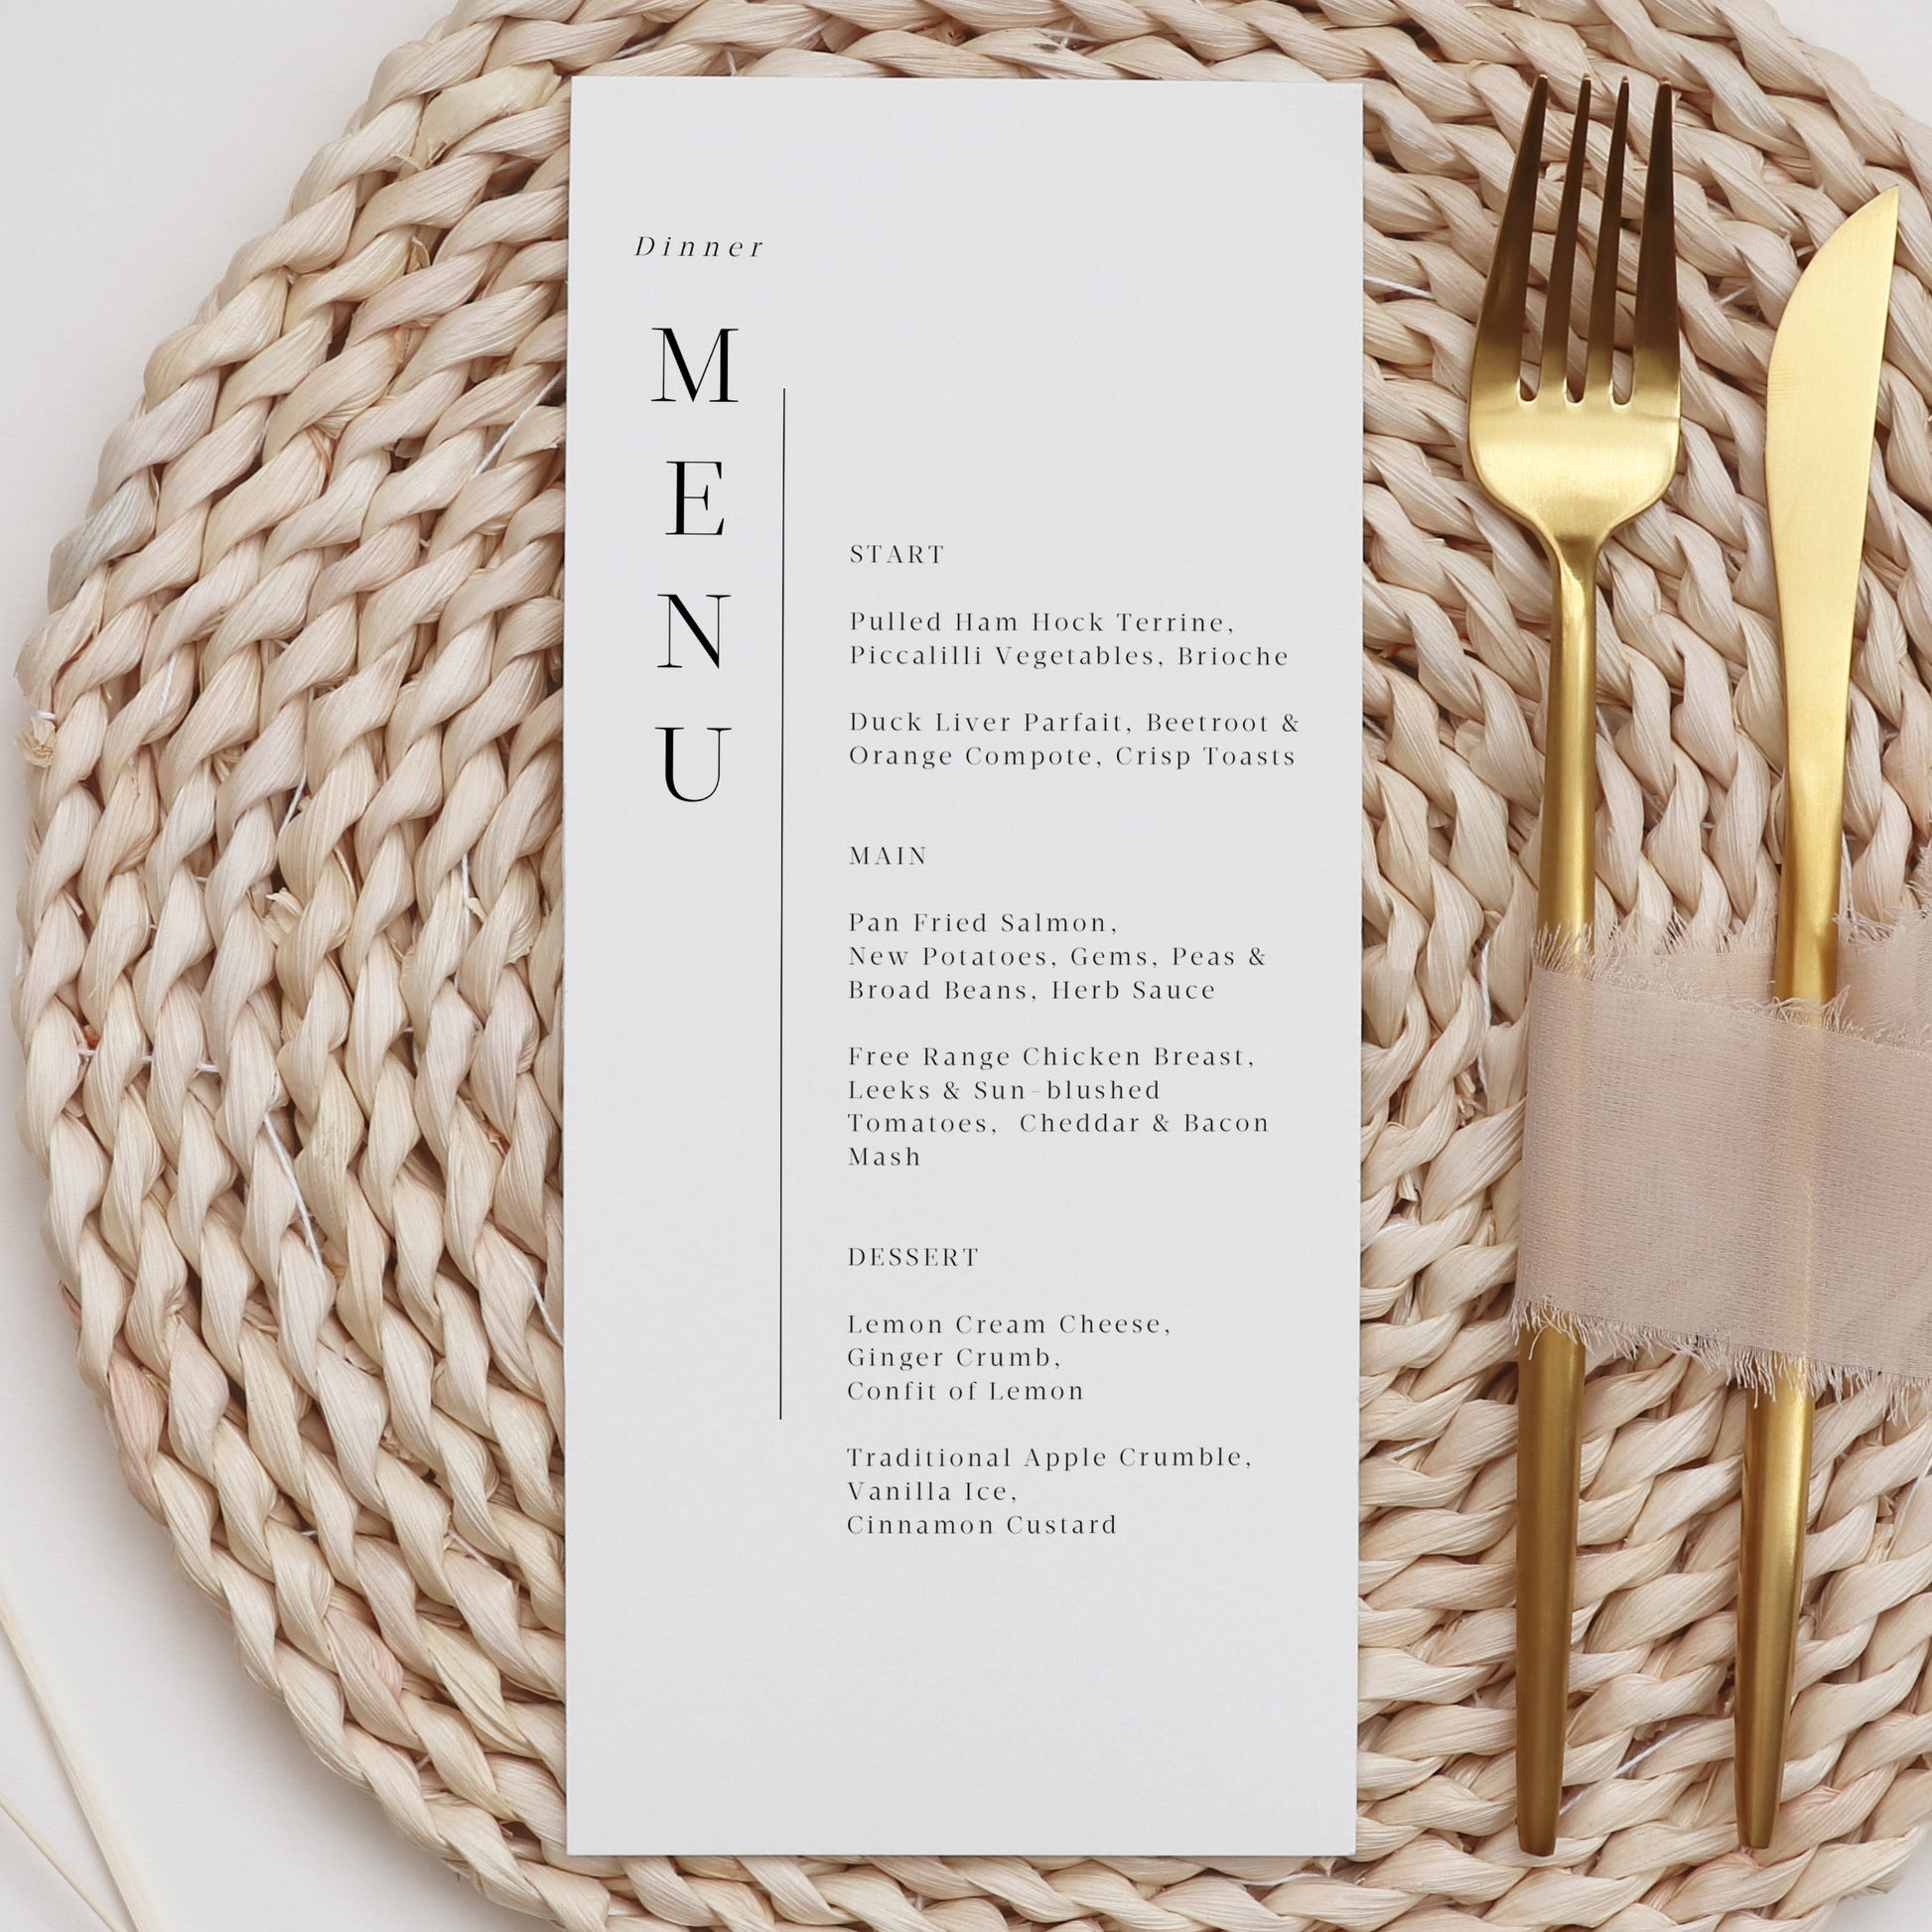 Long Minimalist Wedding Menu - Make Me Digital: printable event invitations, party games & decor